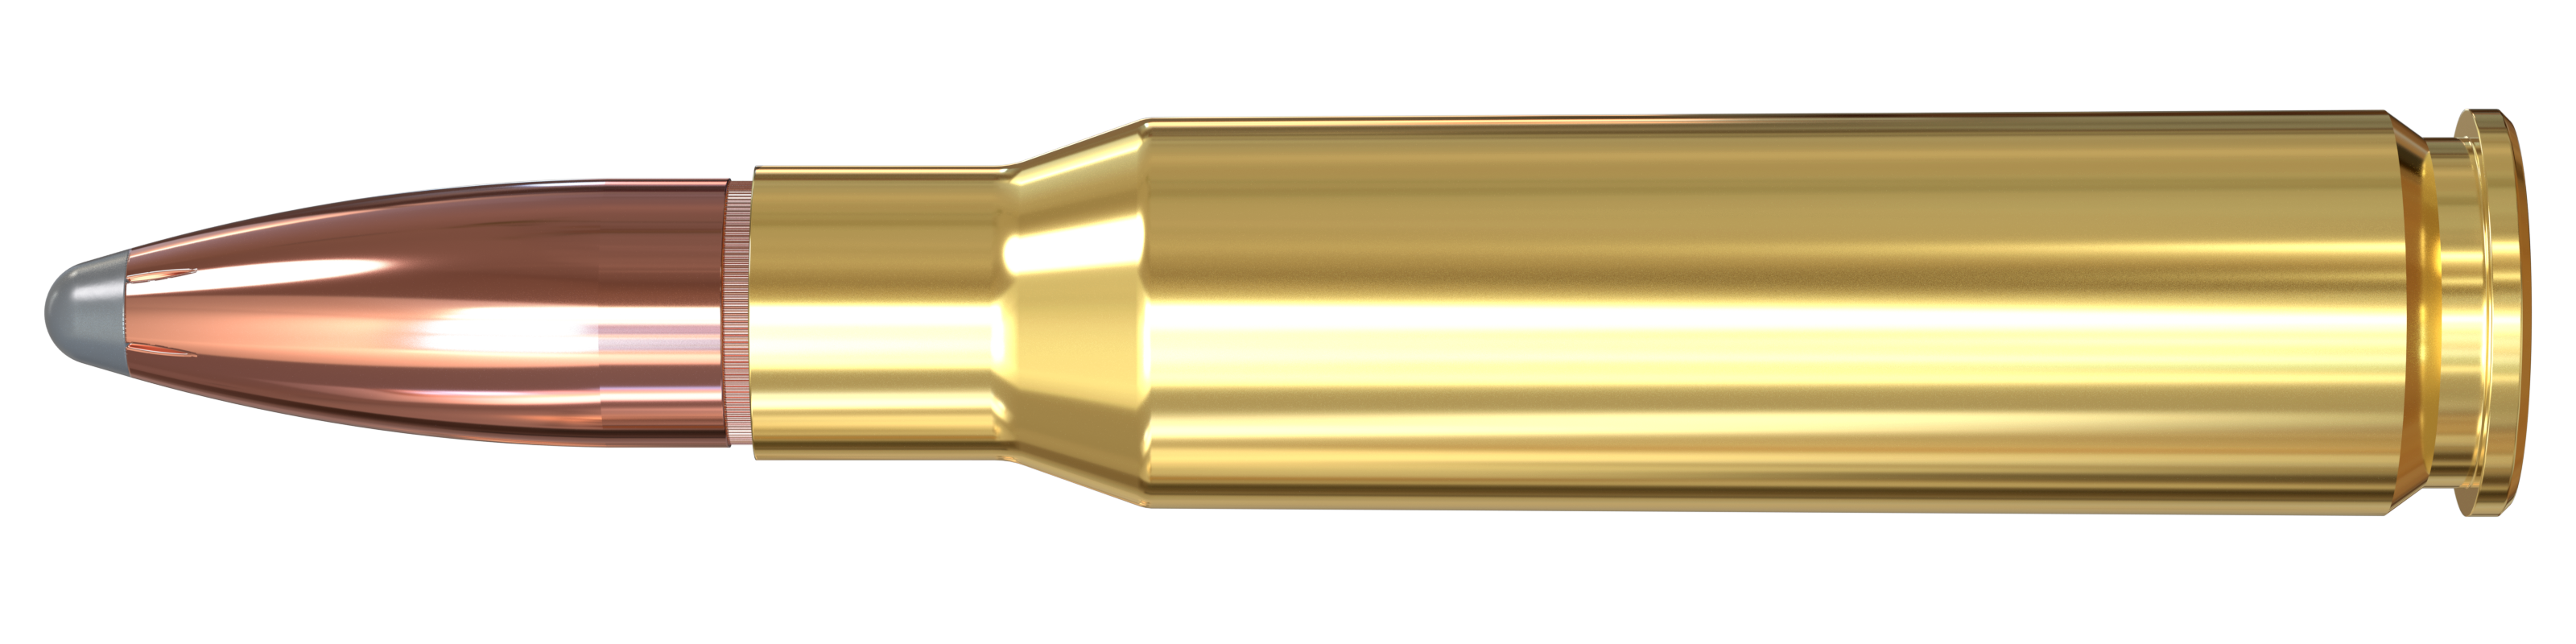 8mm Mauser (8 x 57), 170 Grain Features